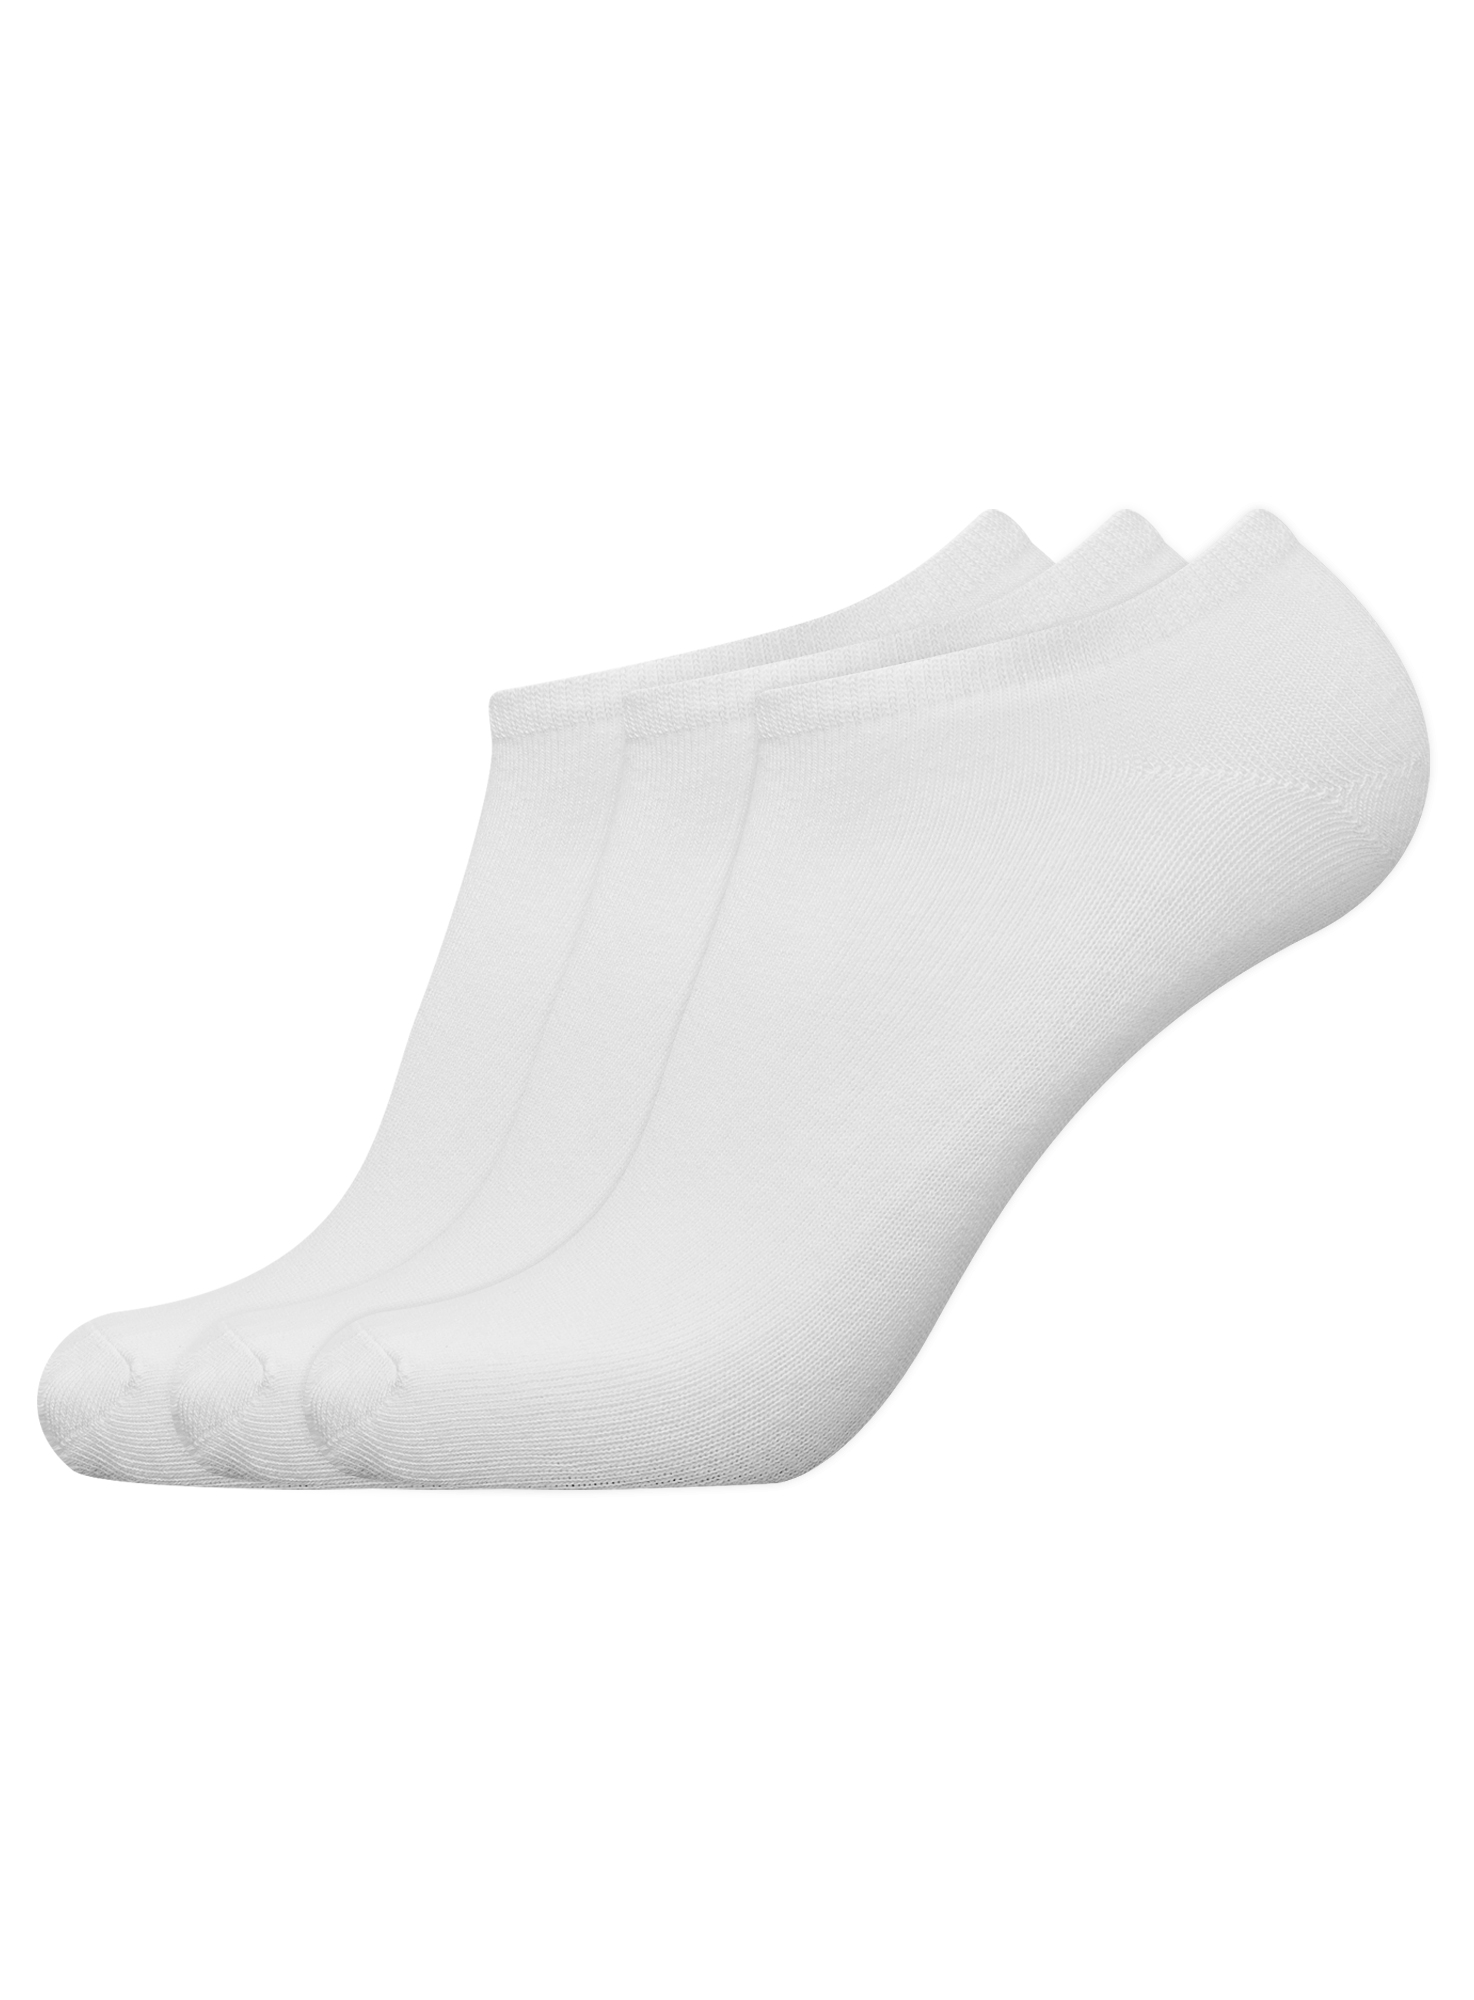 Комплект носков мужских oodji 7B231000T3 белых 40-43